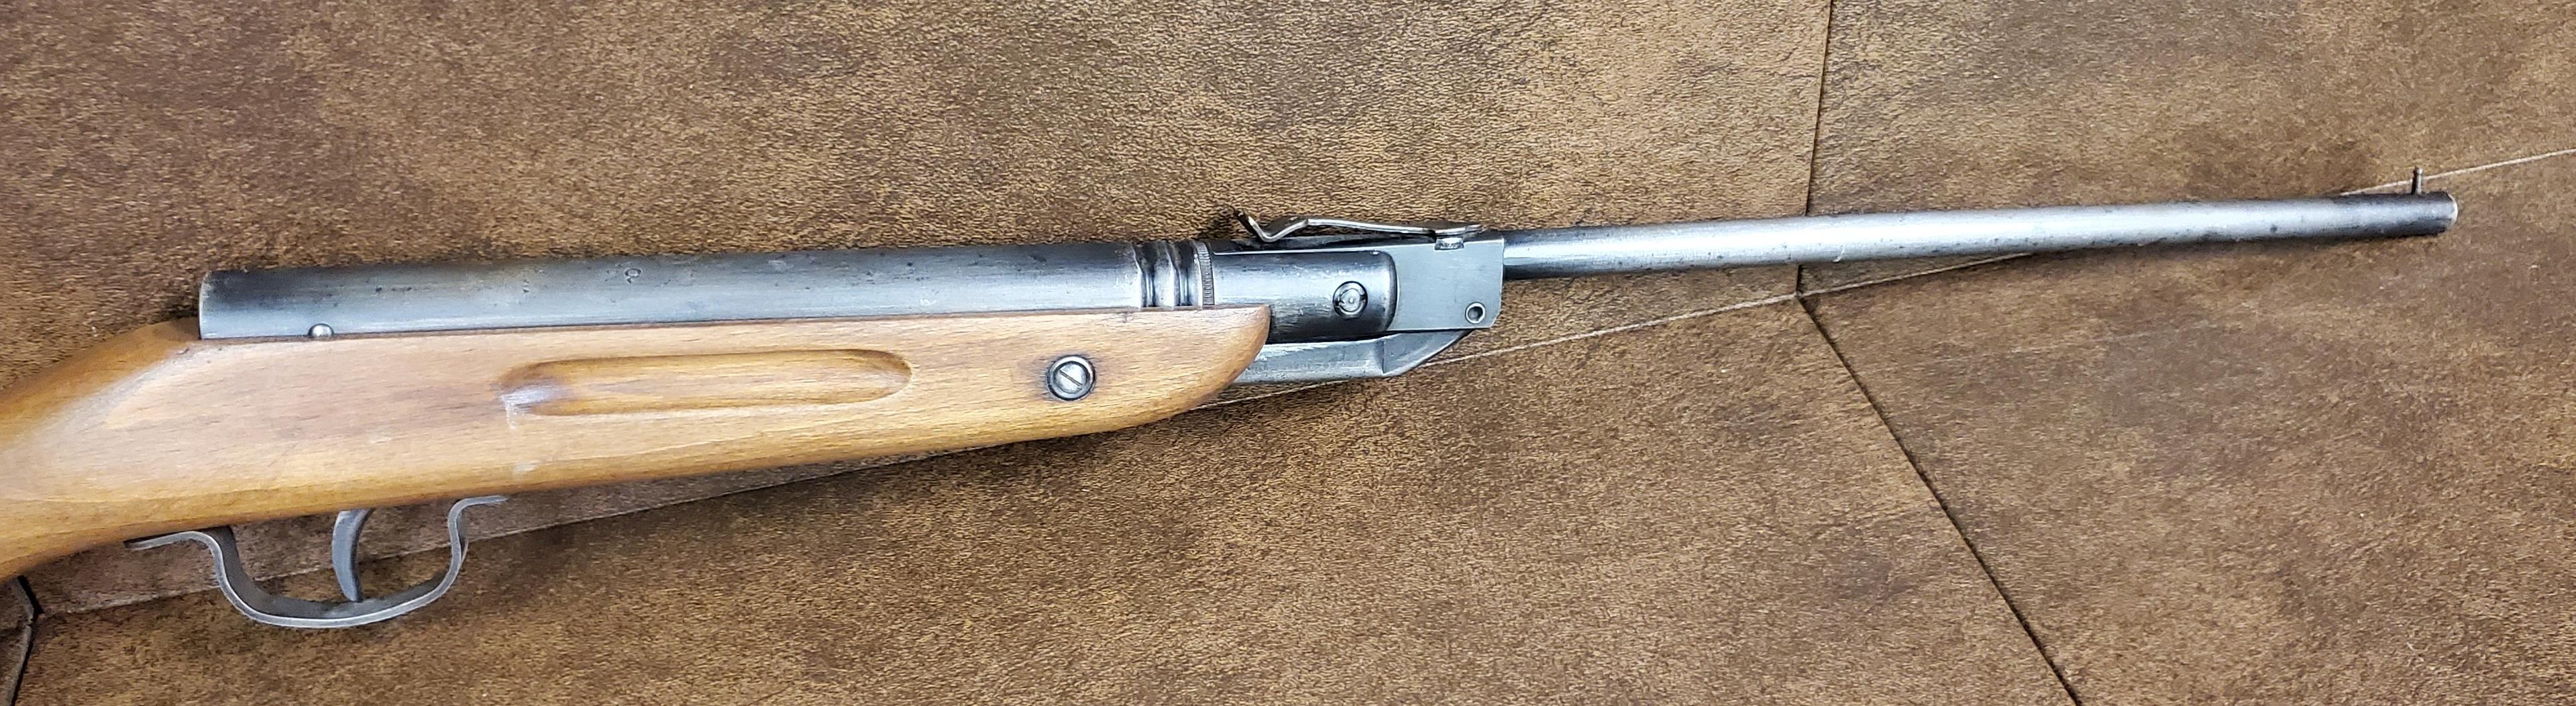 SEAVIA 618 Pellet Gun